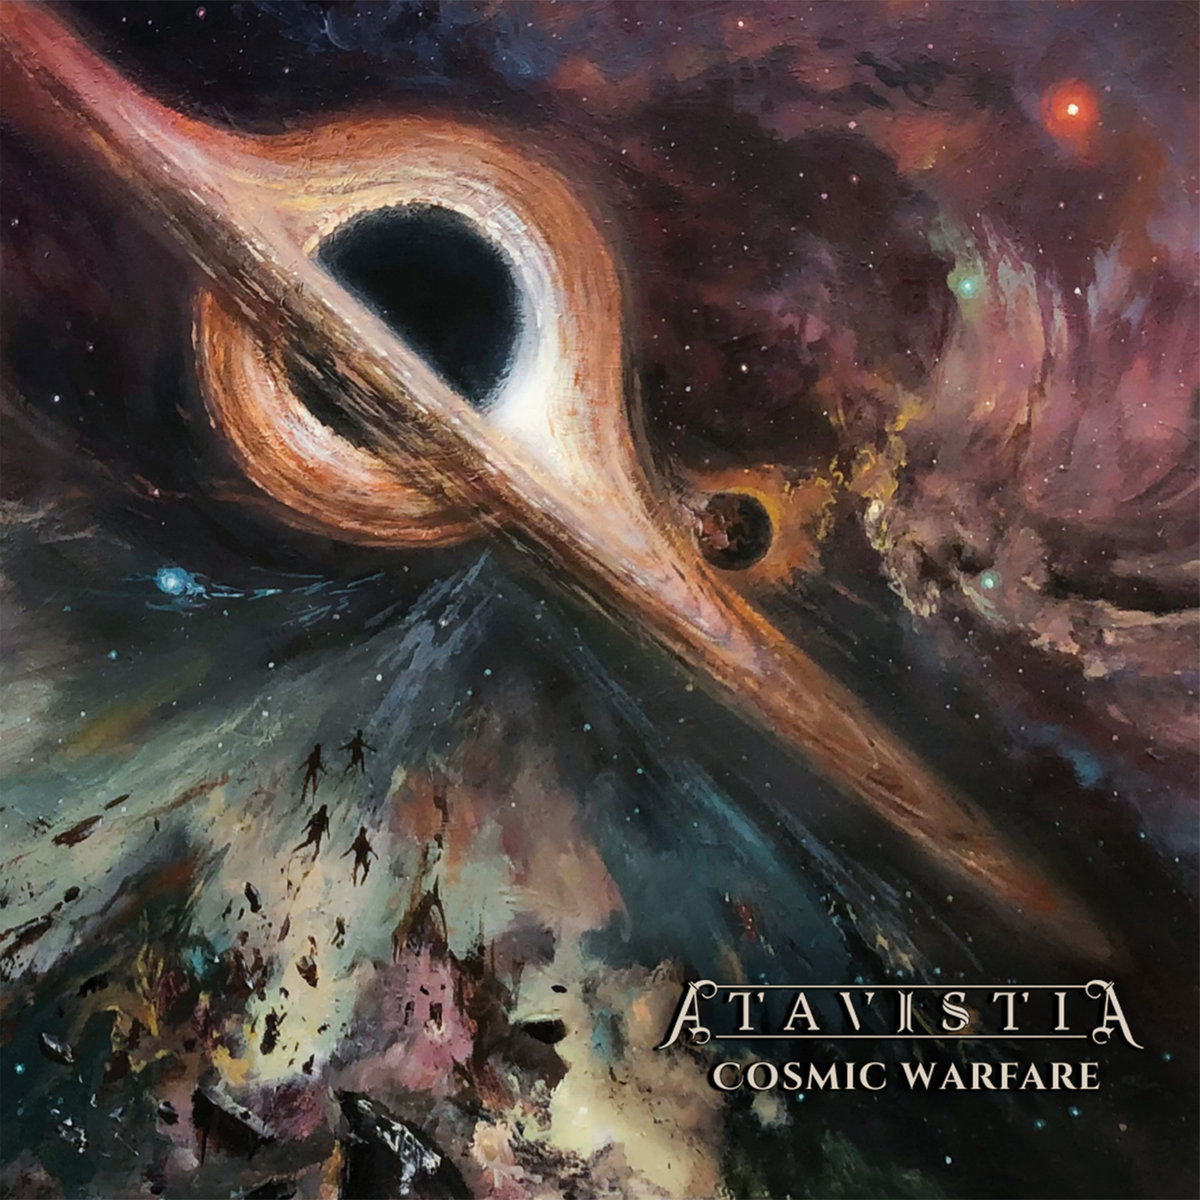 Atavistia- Cosmic Warfare